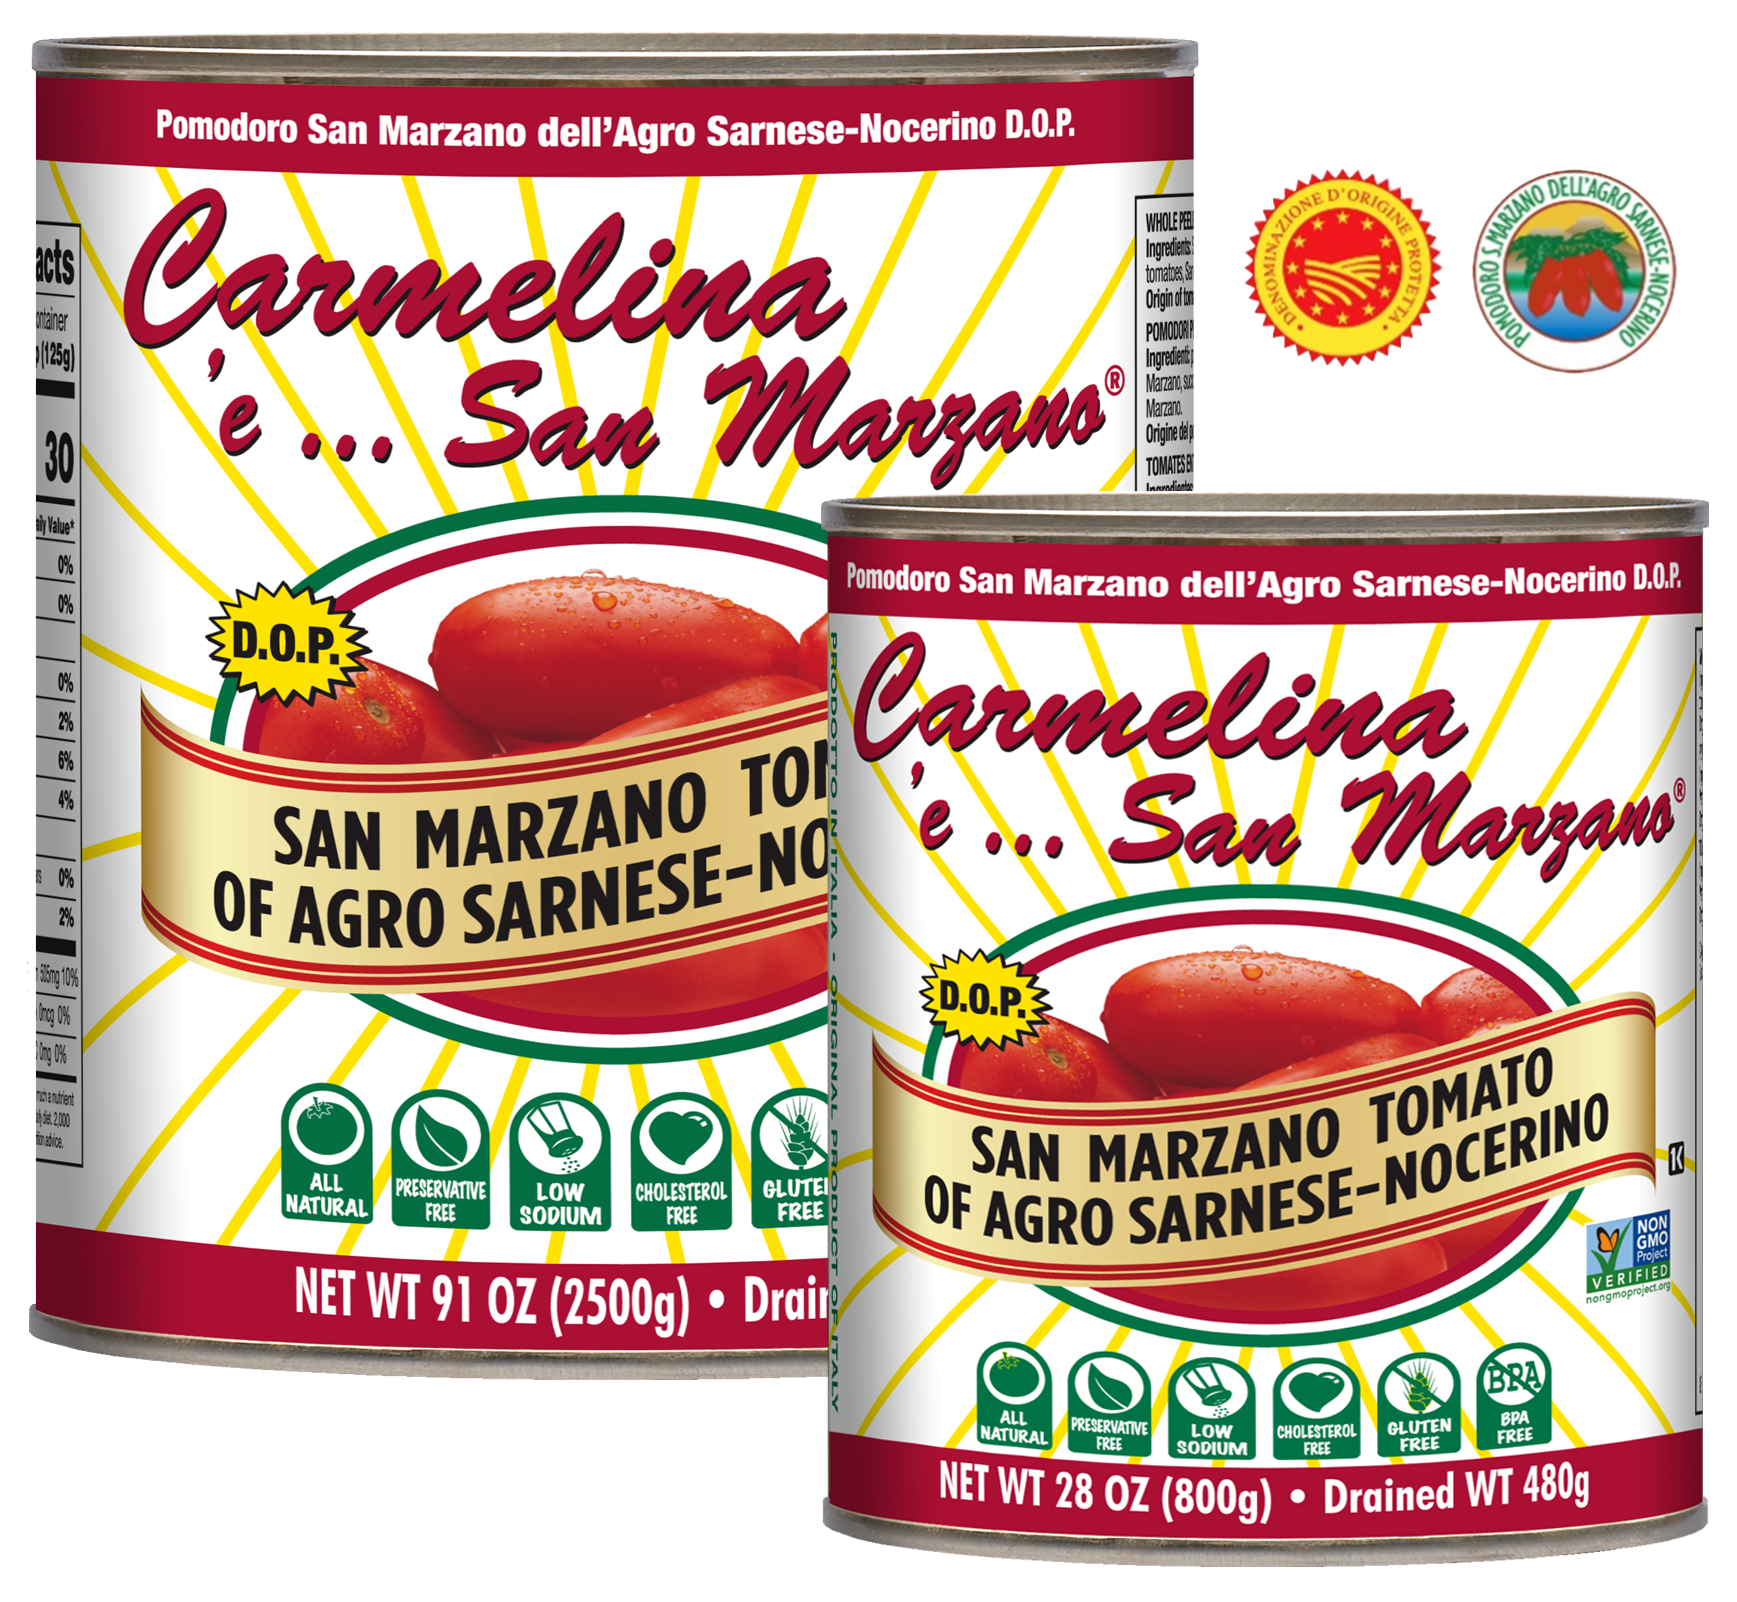 San Marzano Tomato of Agro Sarnese-Nocerino D.O.P.